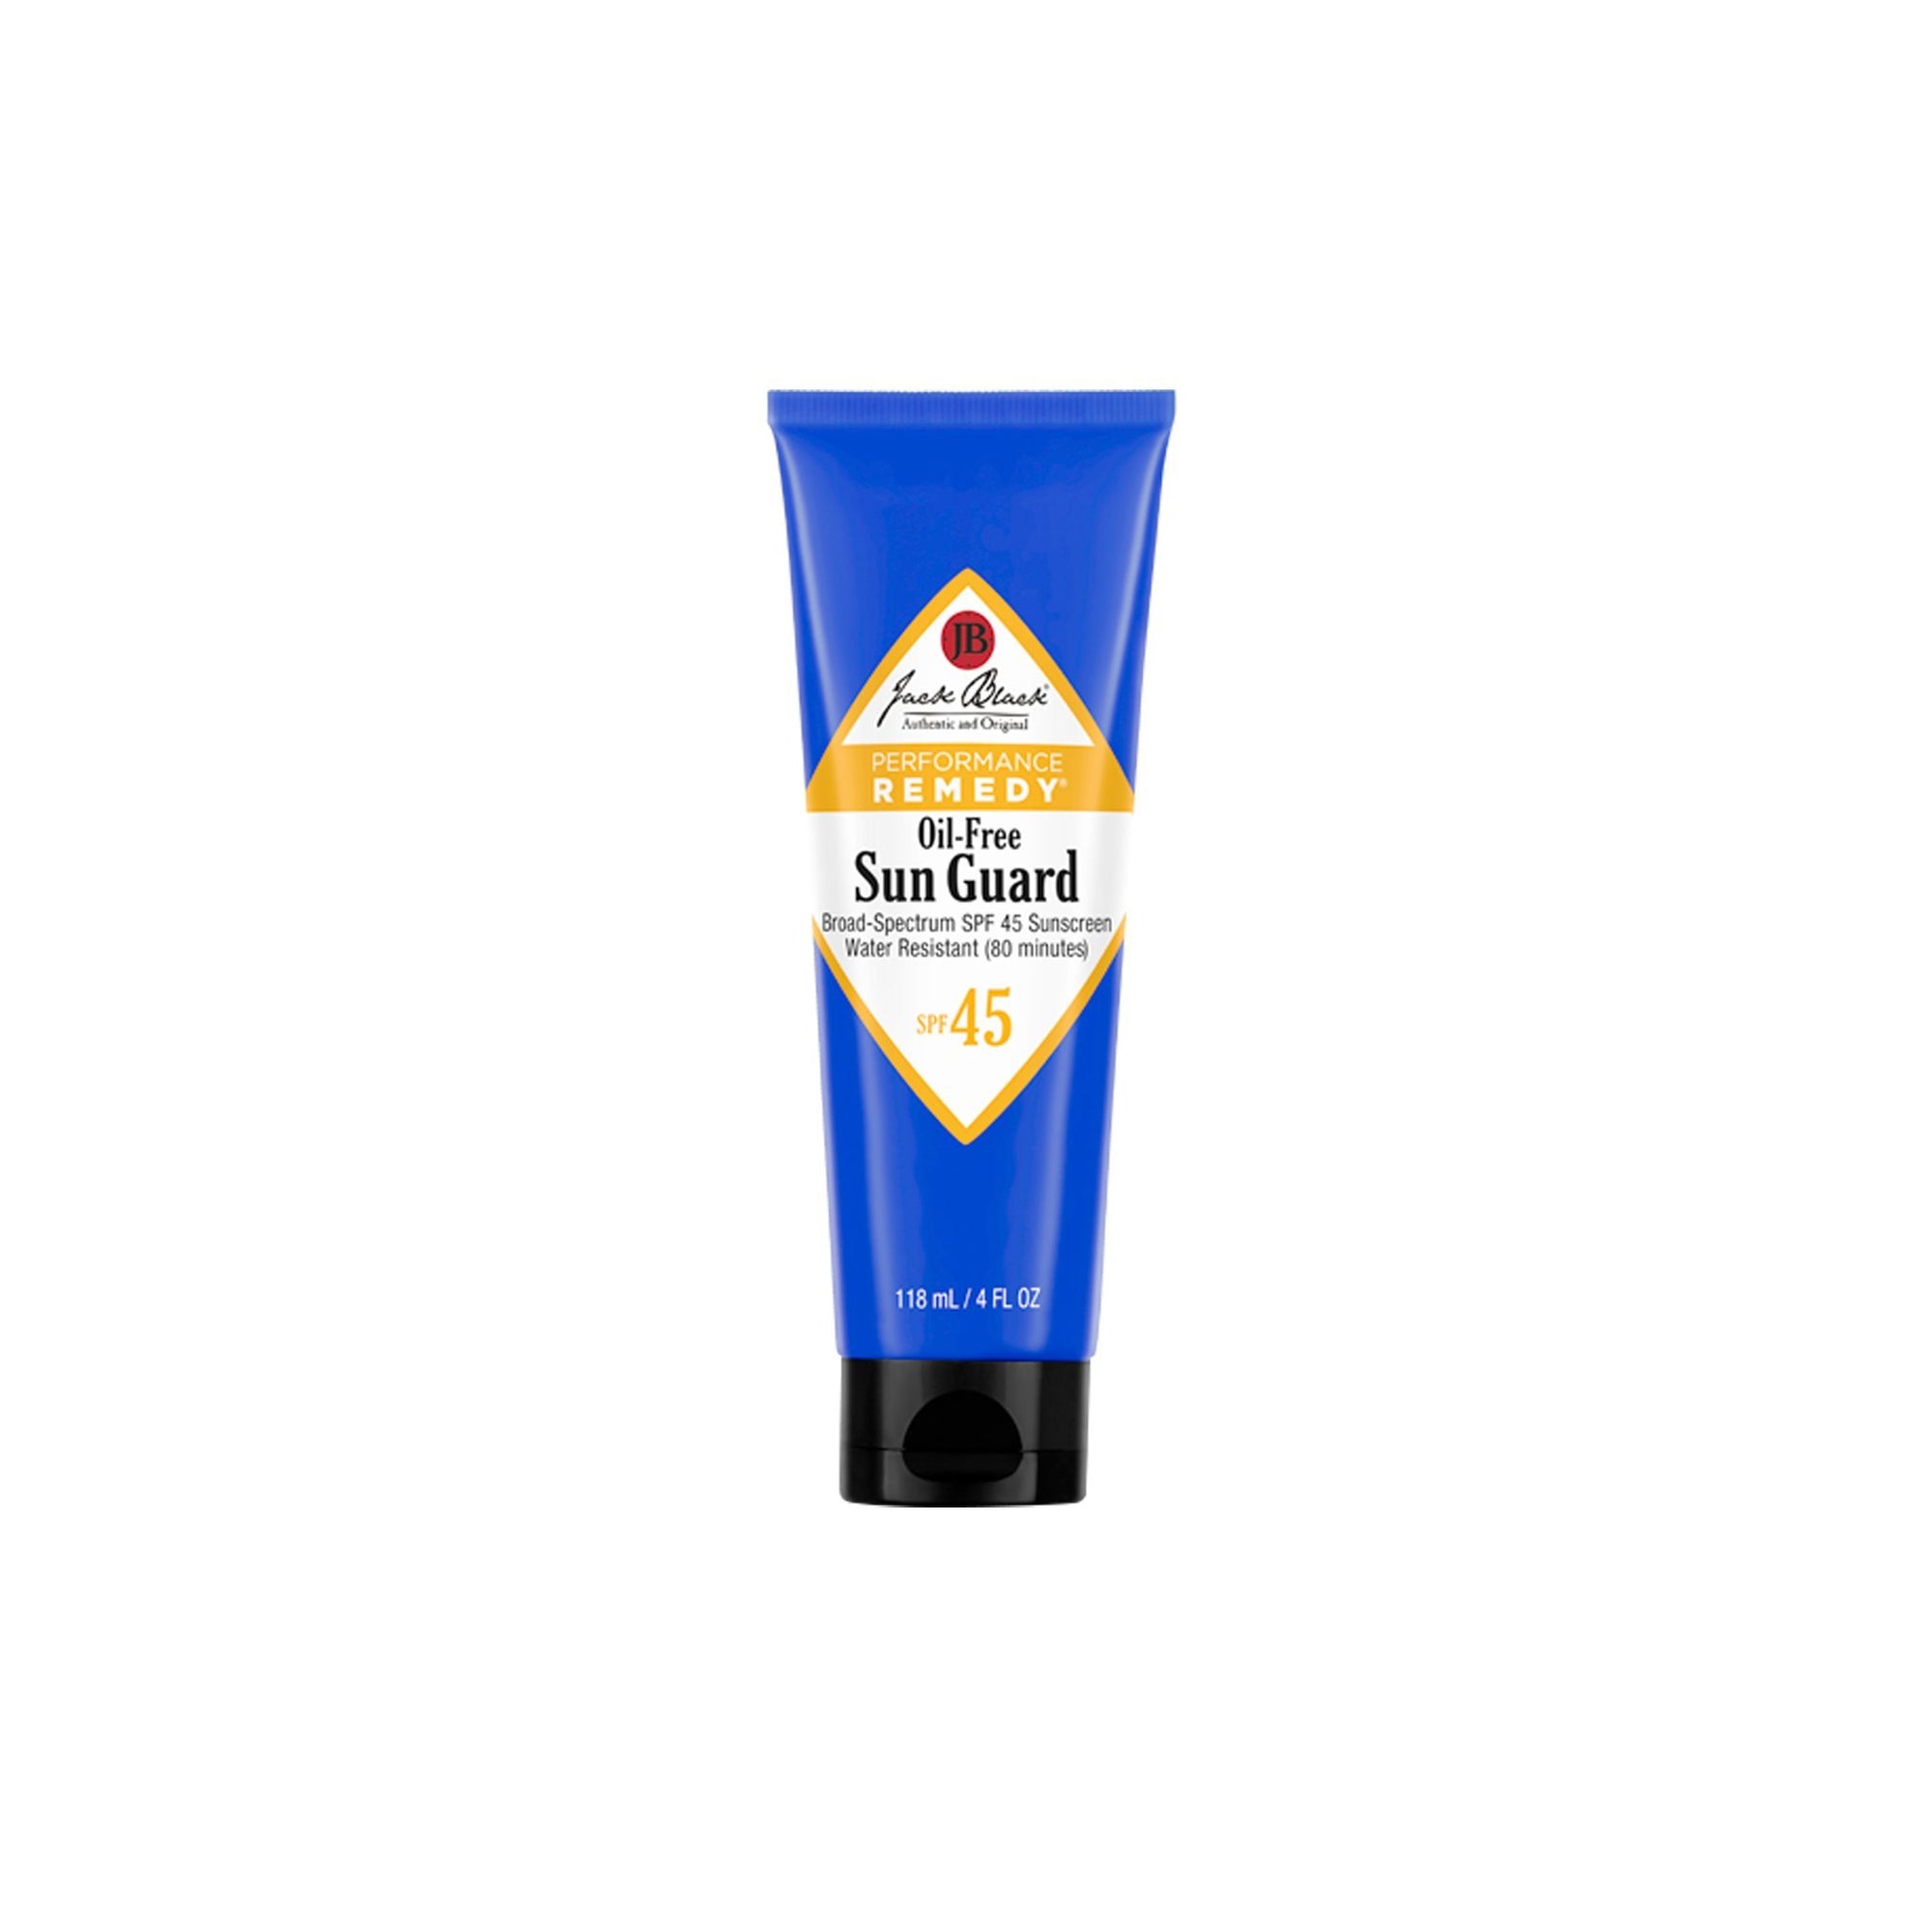 Jack Black Oil-Free Sun Guard SPF 45 Sunscreen 118ml